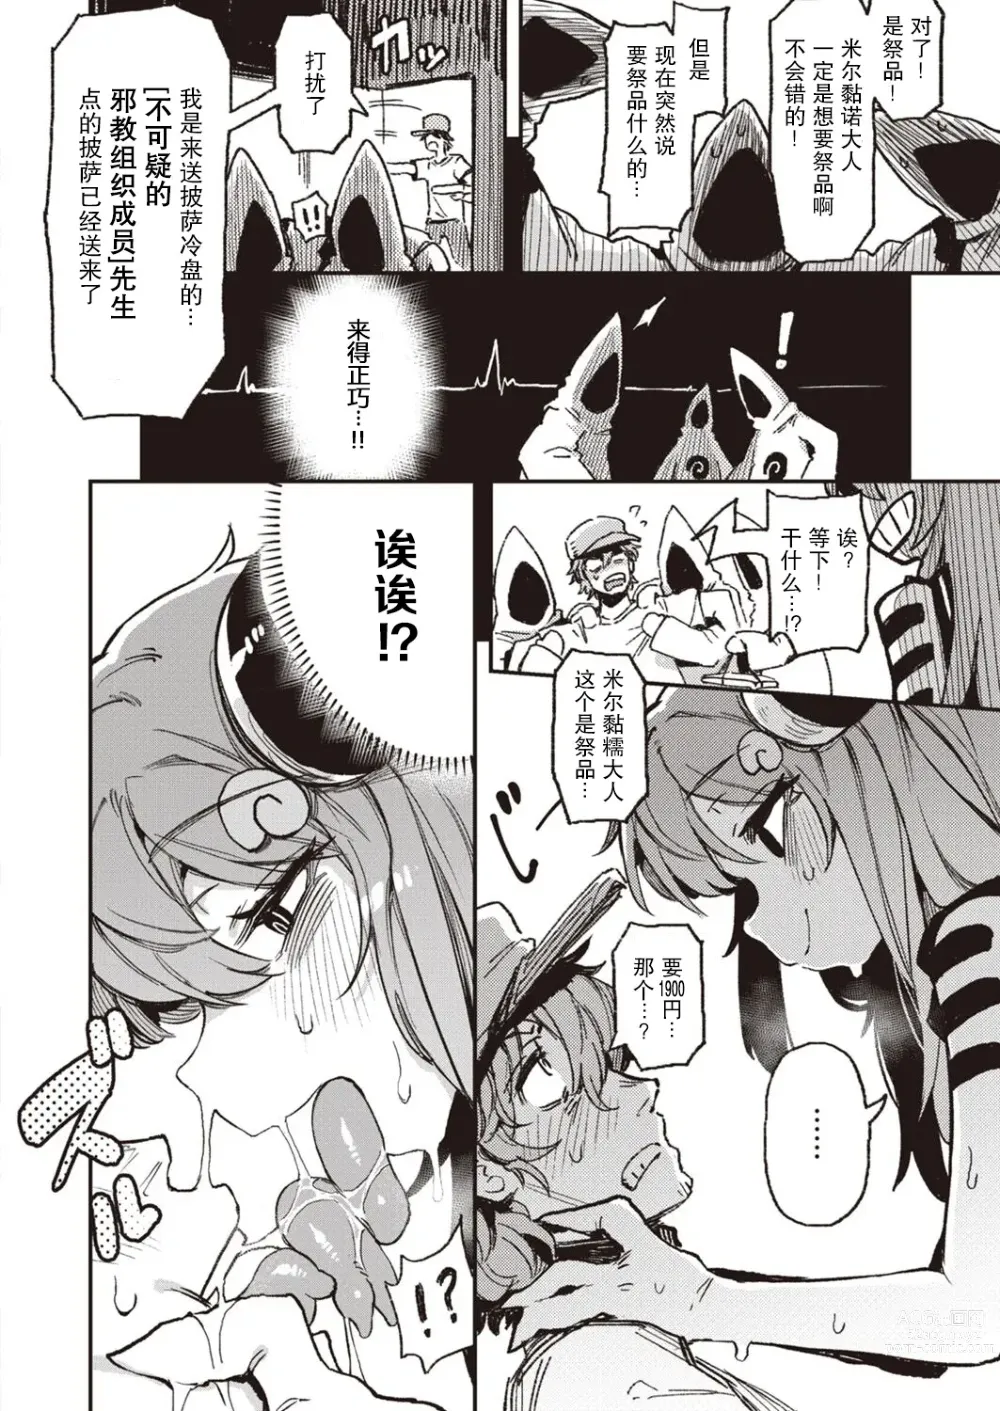 Page 28 of manga Inogami